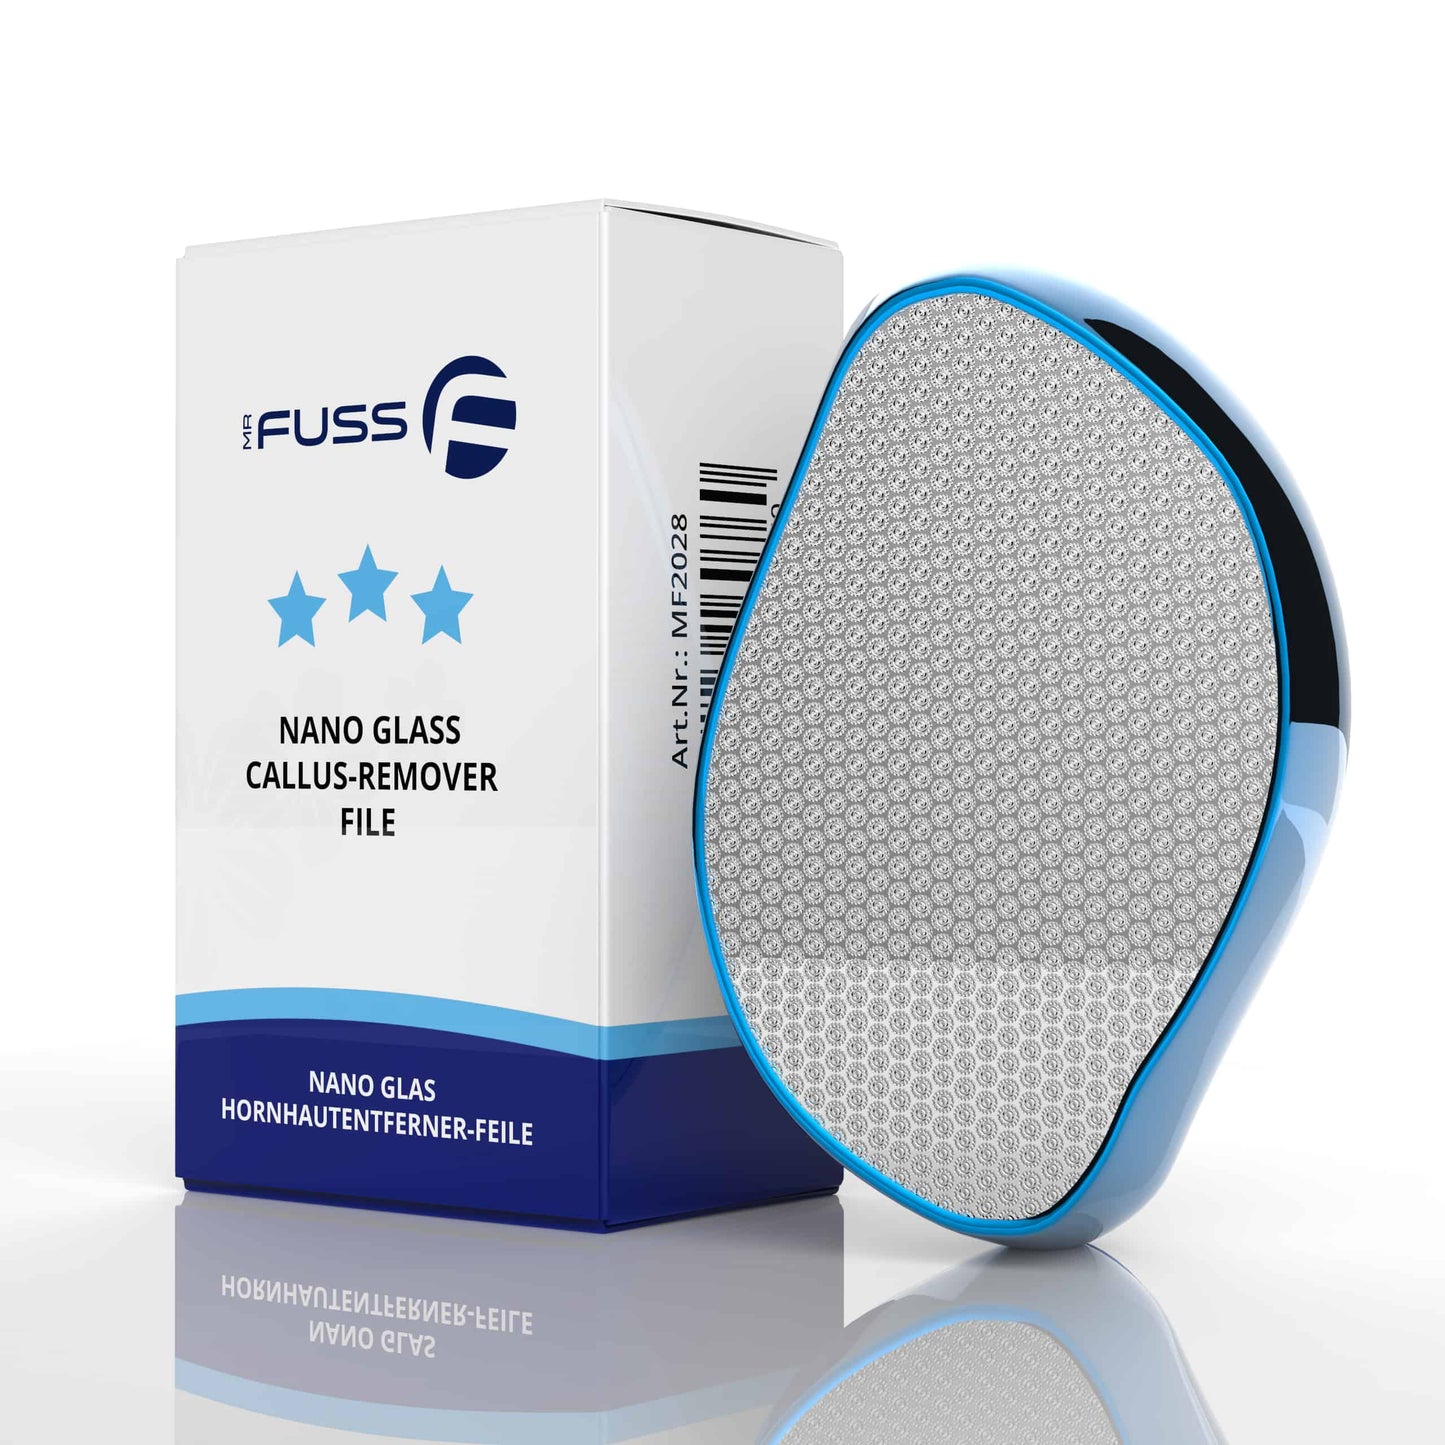 Mr. Fuss® - Nano Glass - Lima 2 en 1 Removedora de Callos